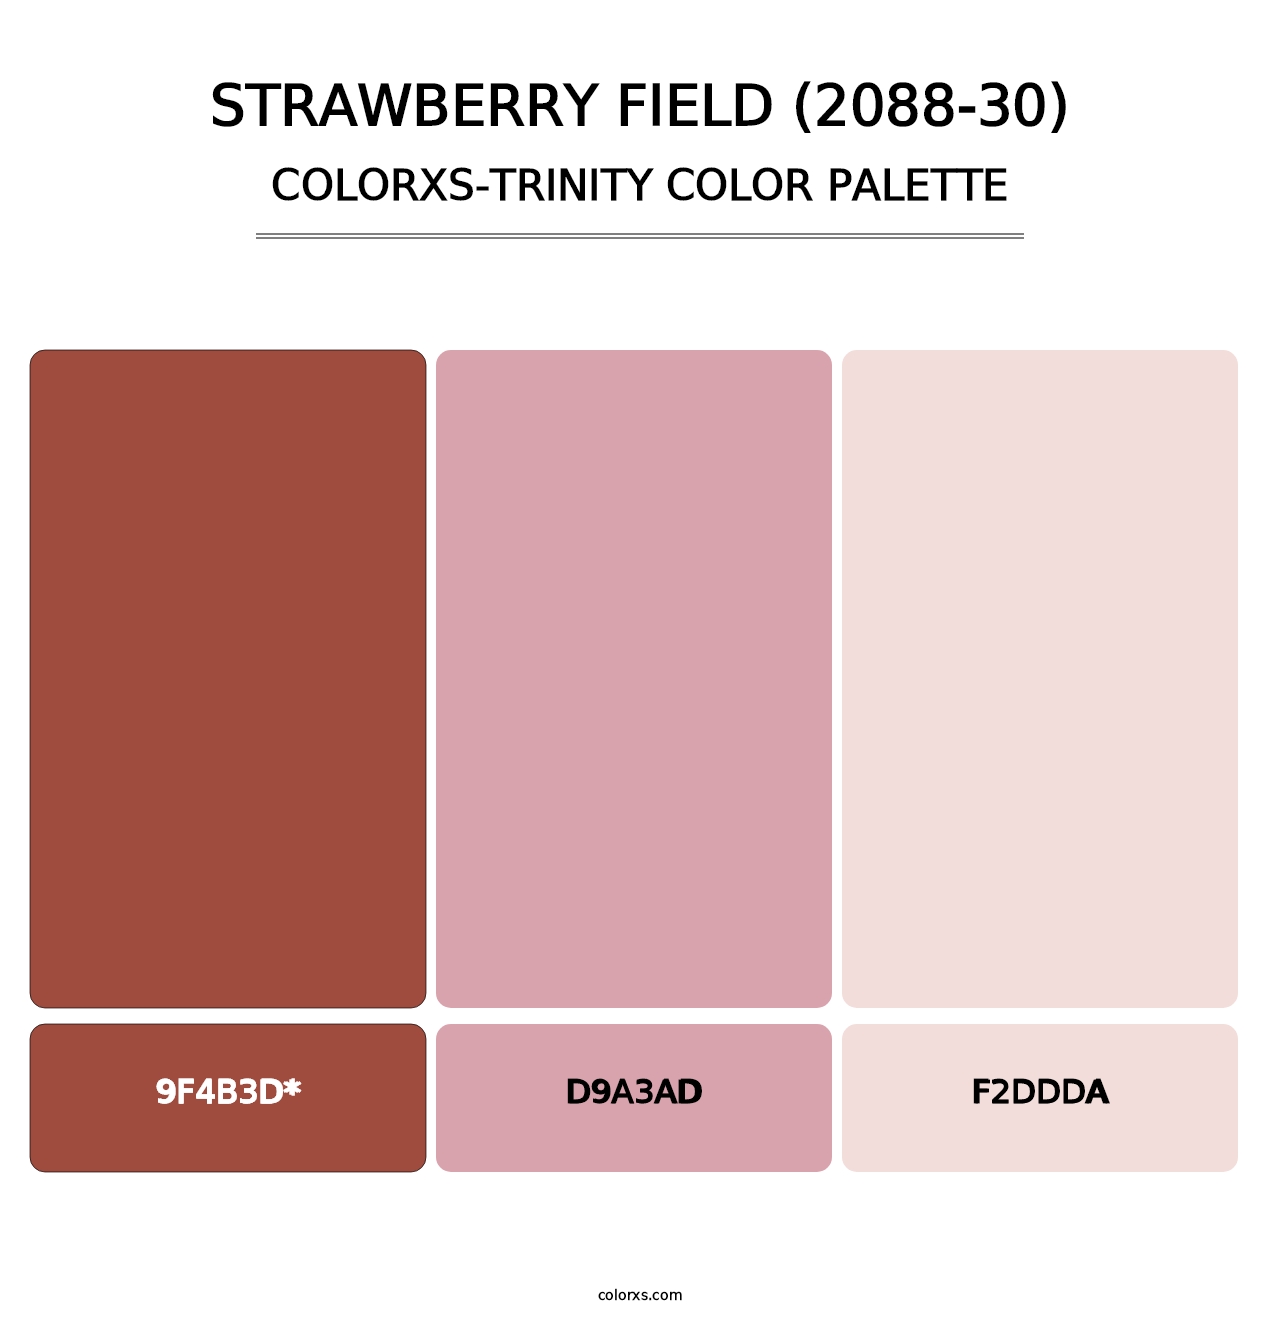 Strawberry Field (2088-30) - Colorxs Trinity Palette